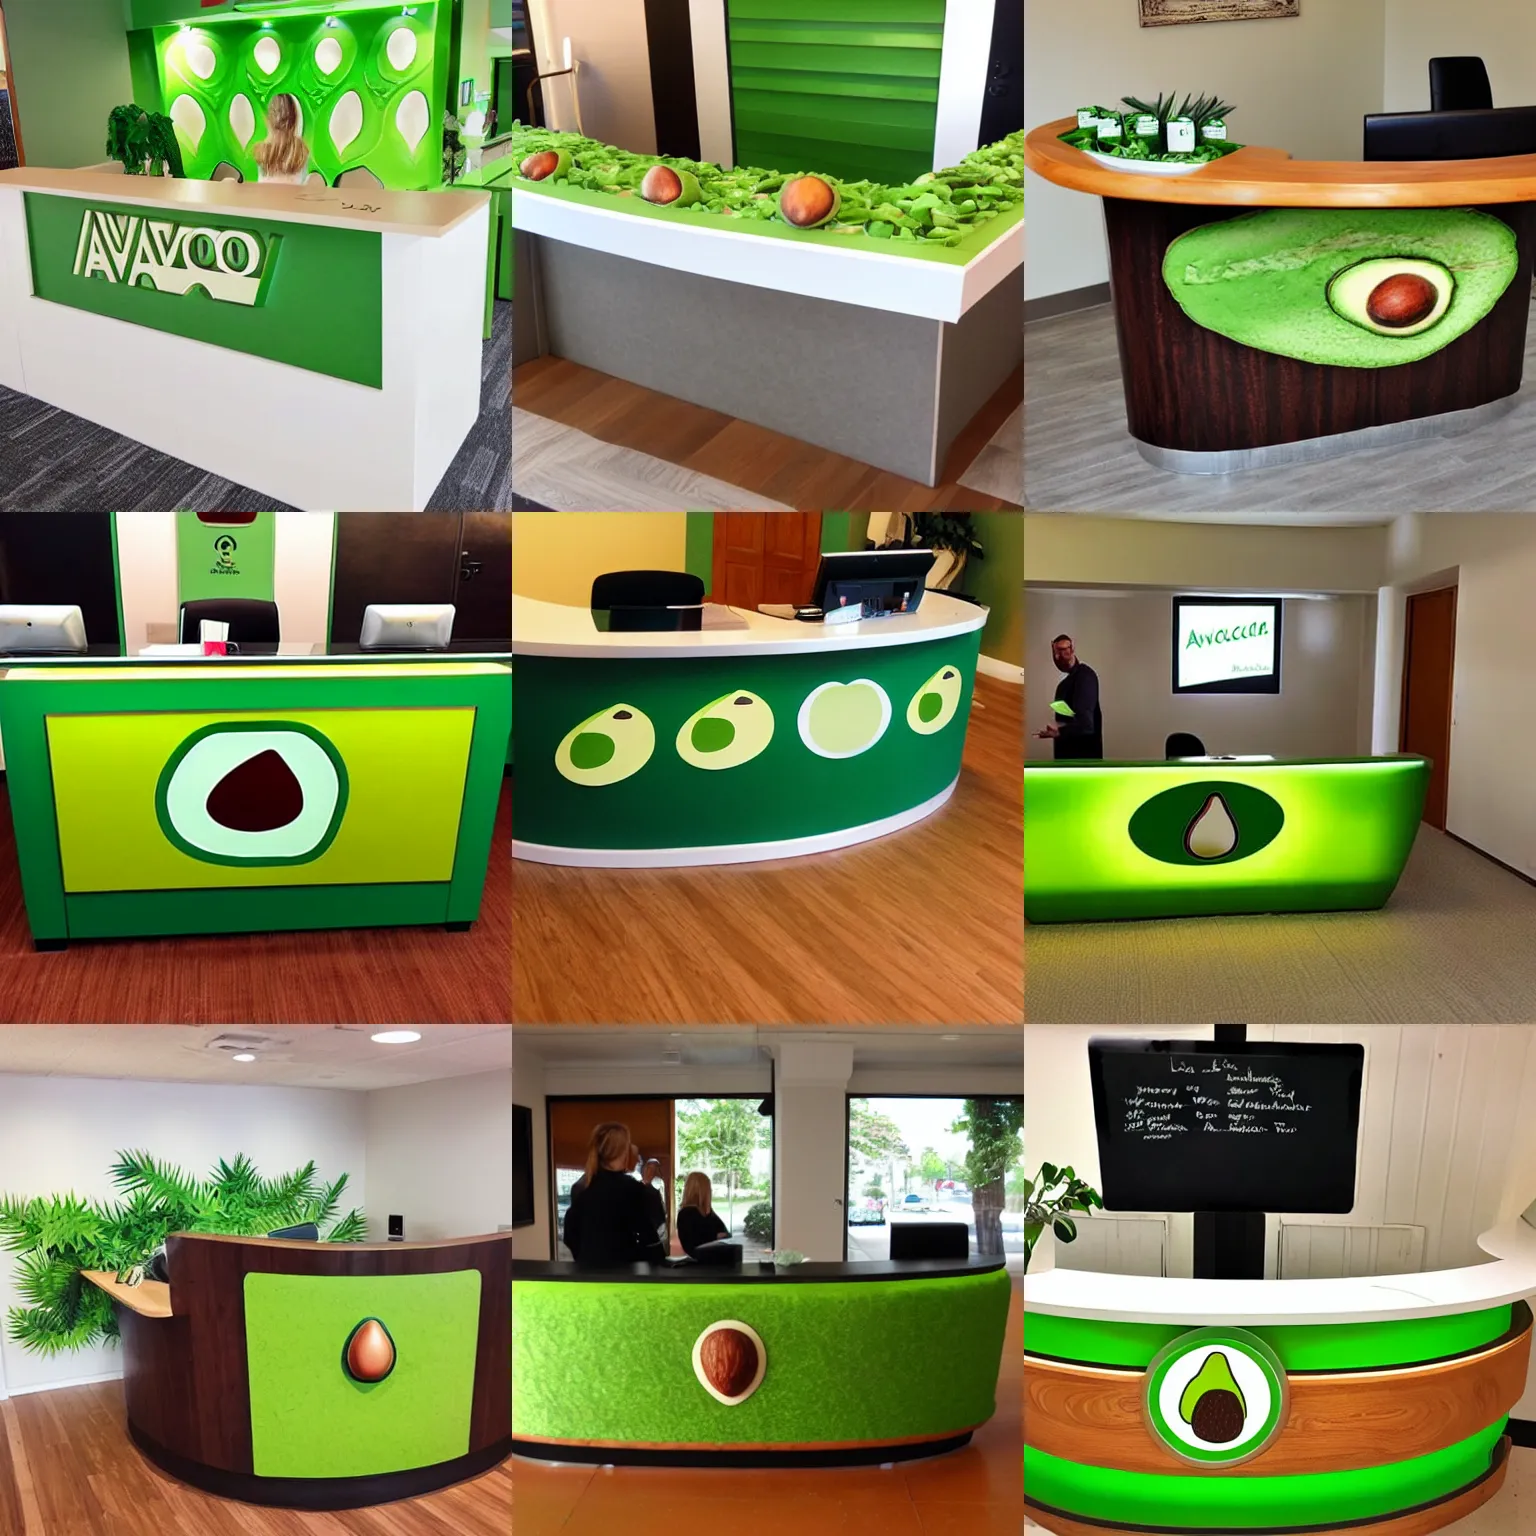 Prompt: Avocado themed reception desk